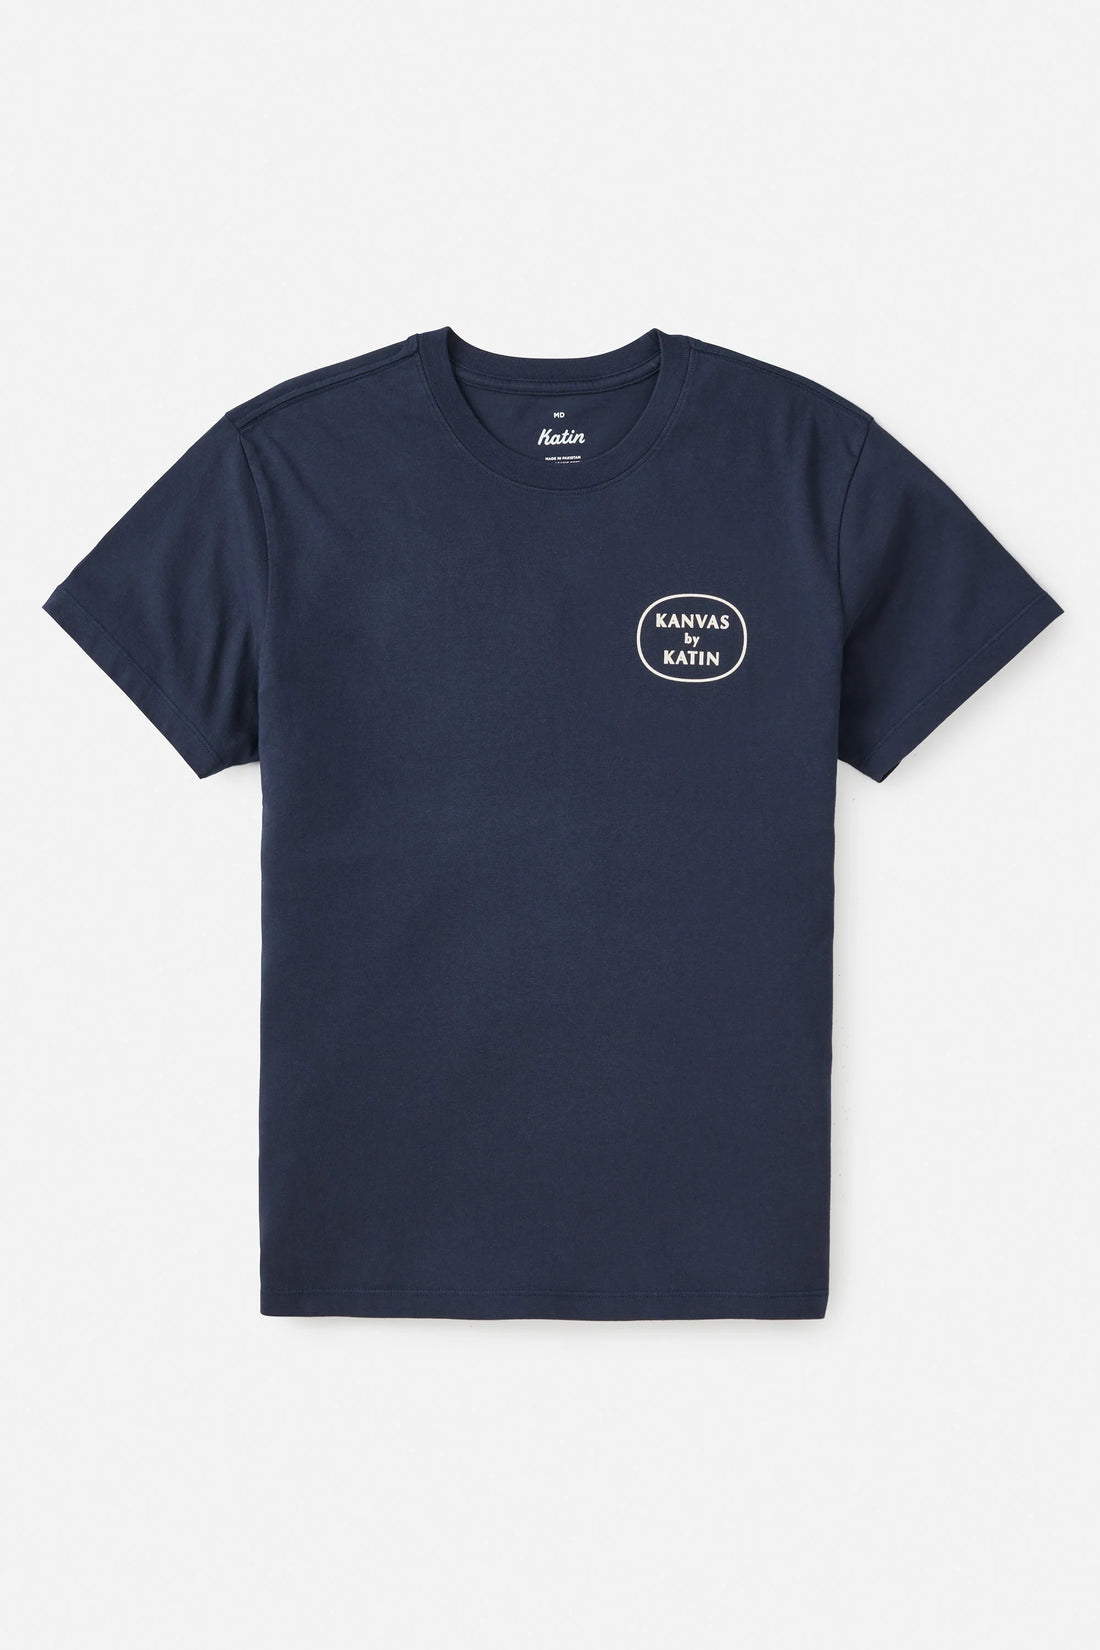 T-Shirt Trimming Bleu Marine Katin